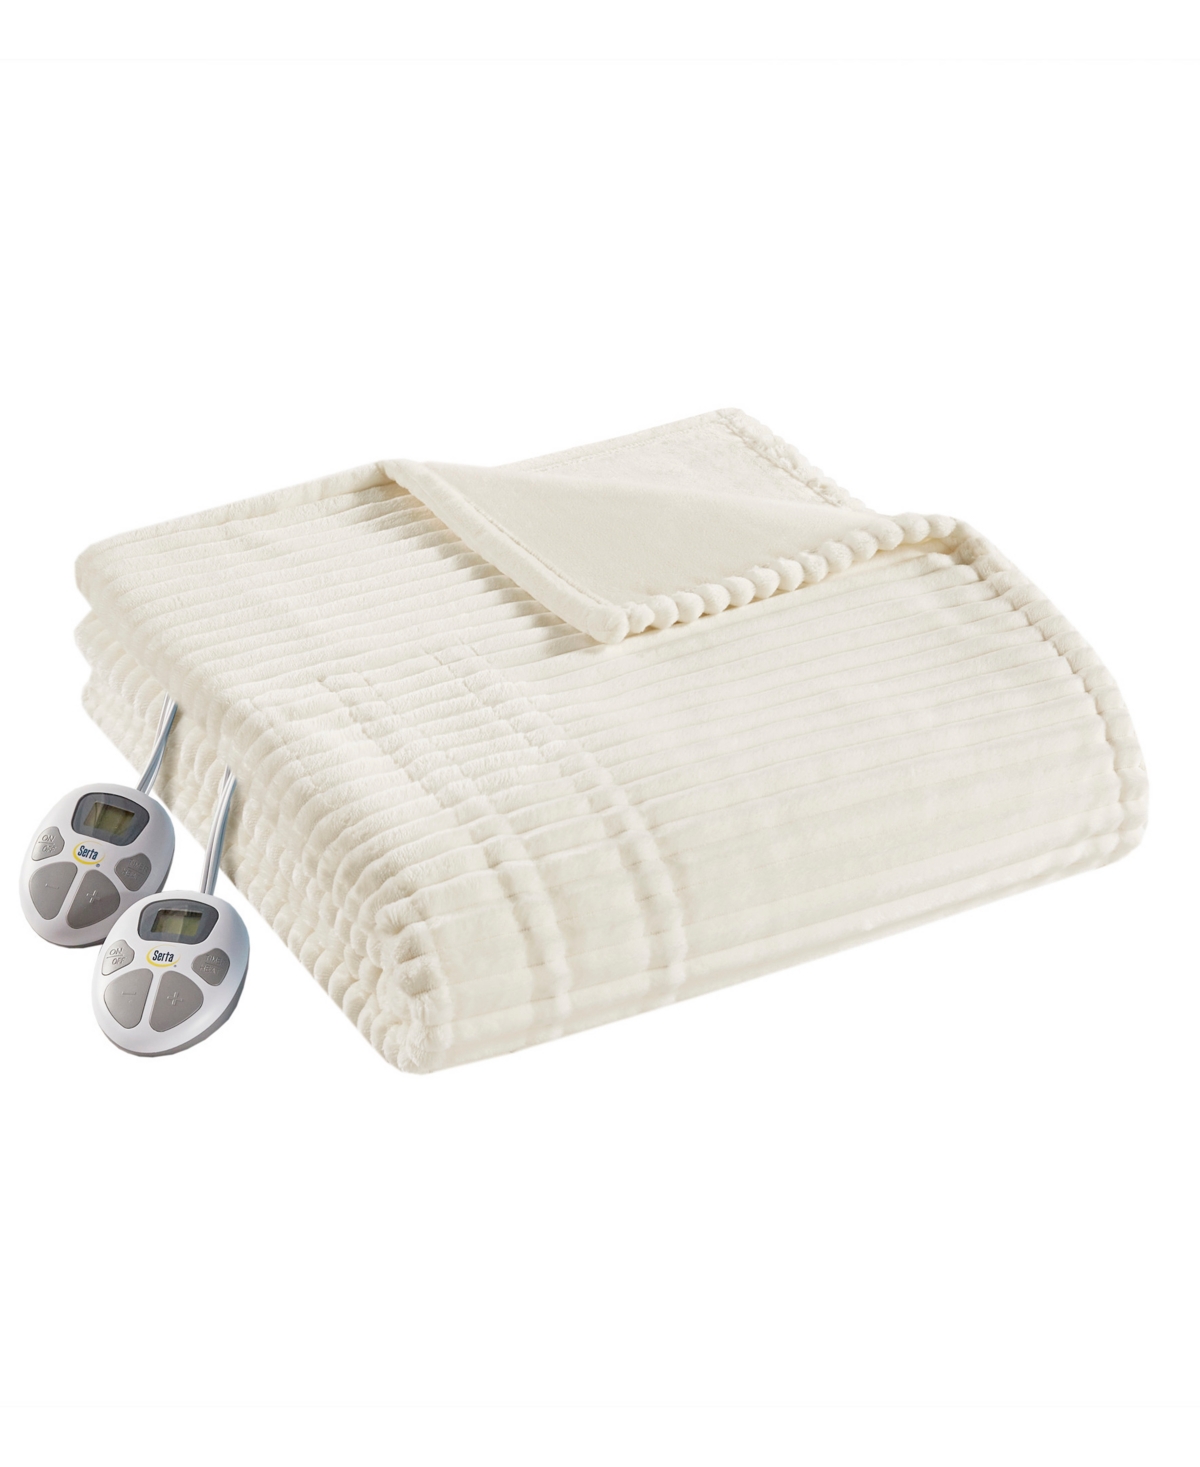 Serta Corded Plush Heated Blanket, Twin In Ivory